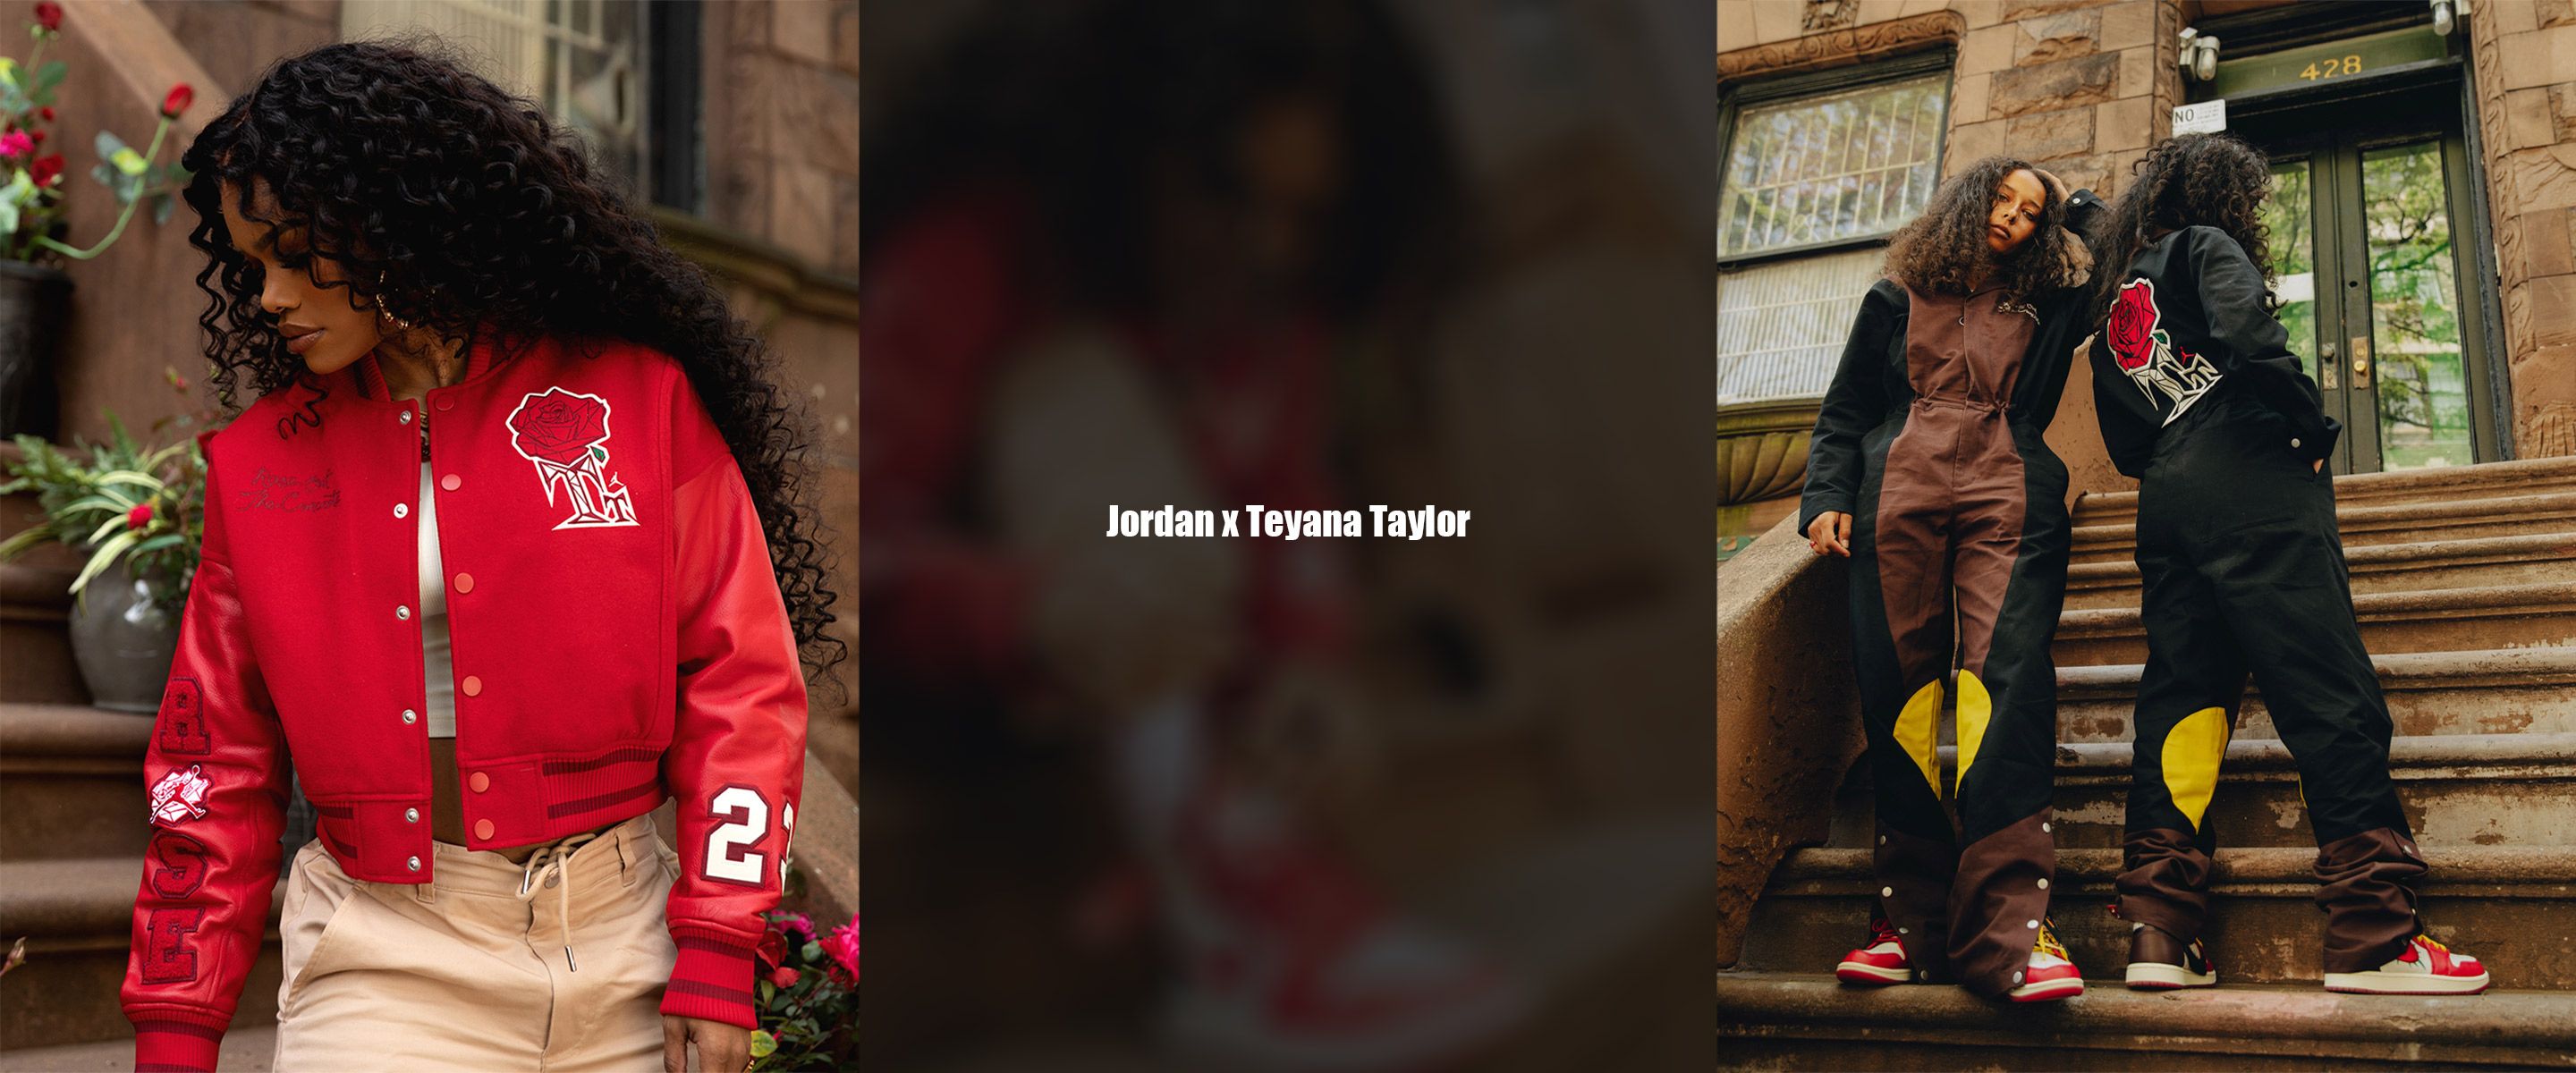 "Jordan x Teyana Taylor Apparel Collection"